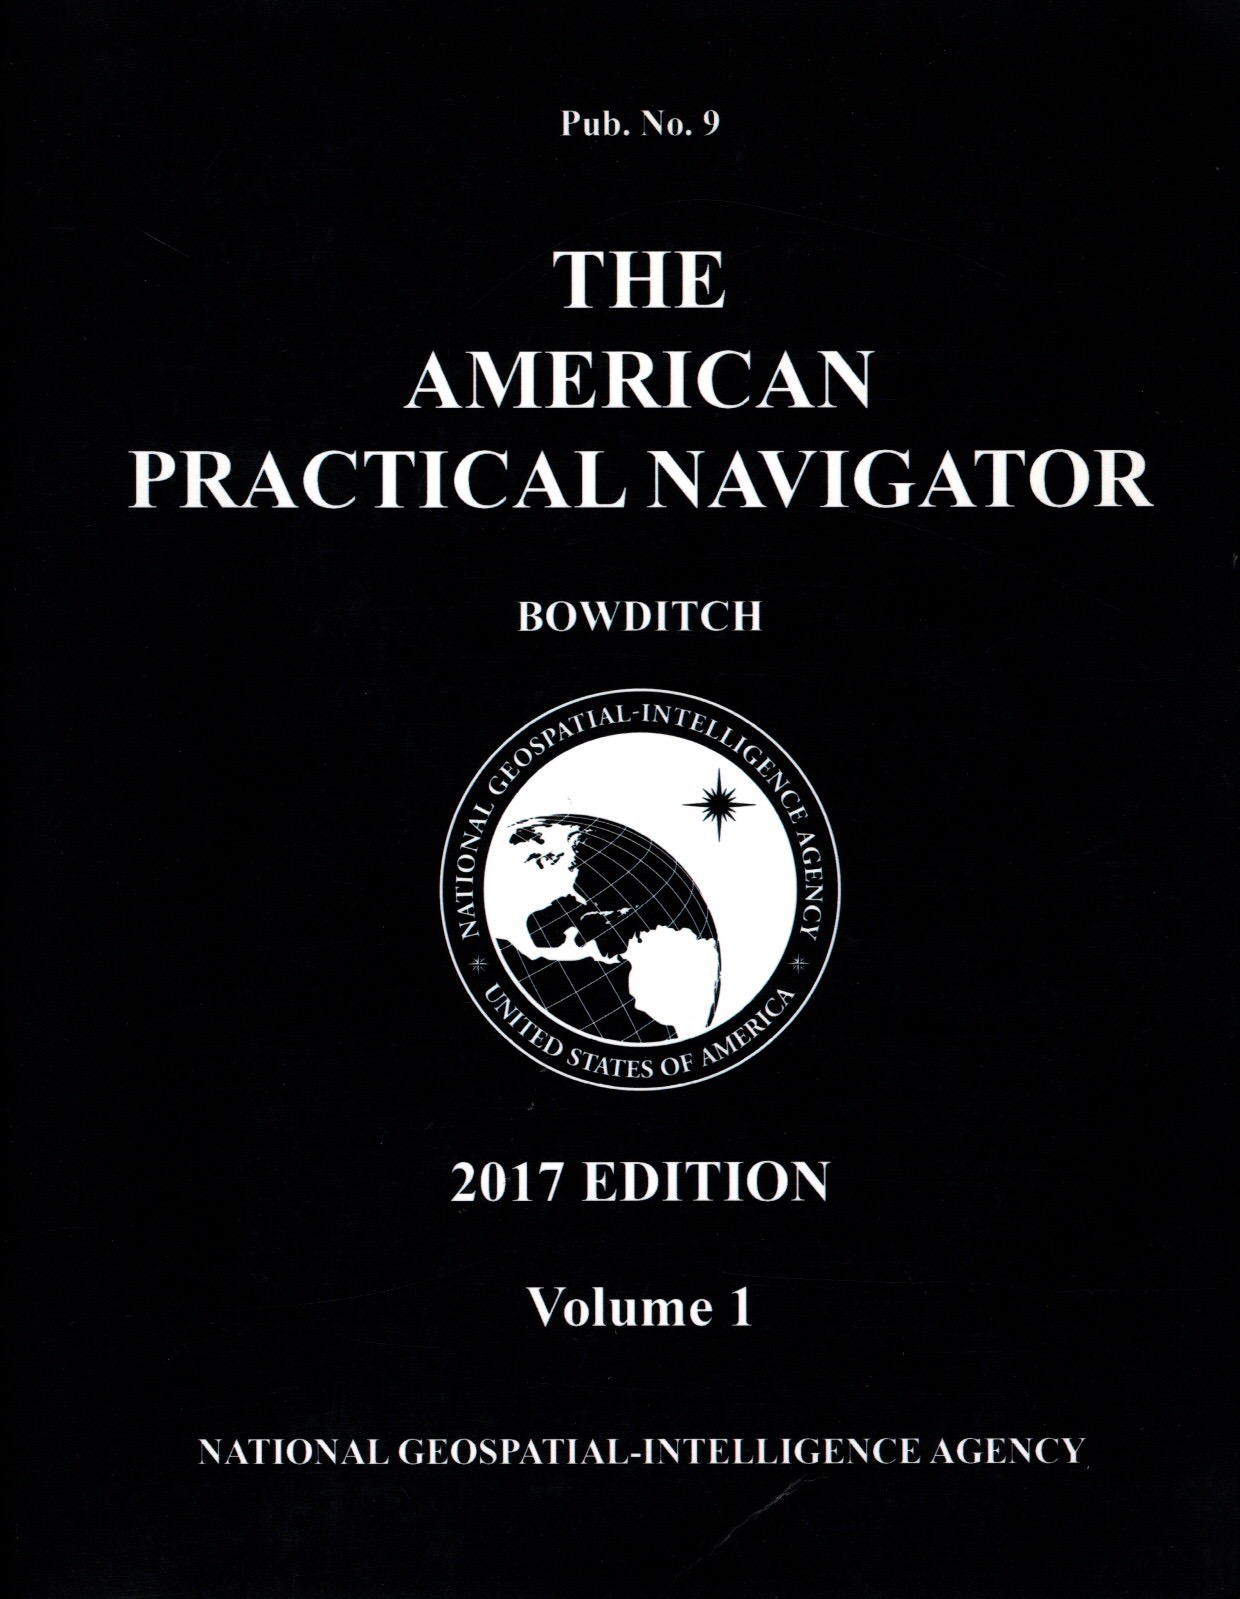 American practical navigator - bowditch vol.1